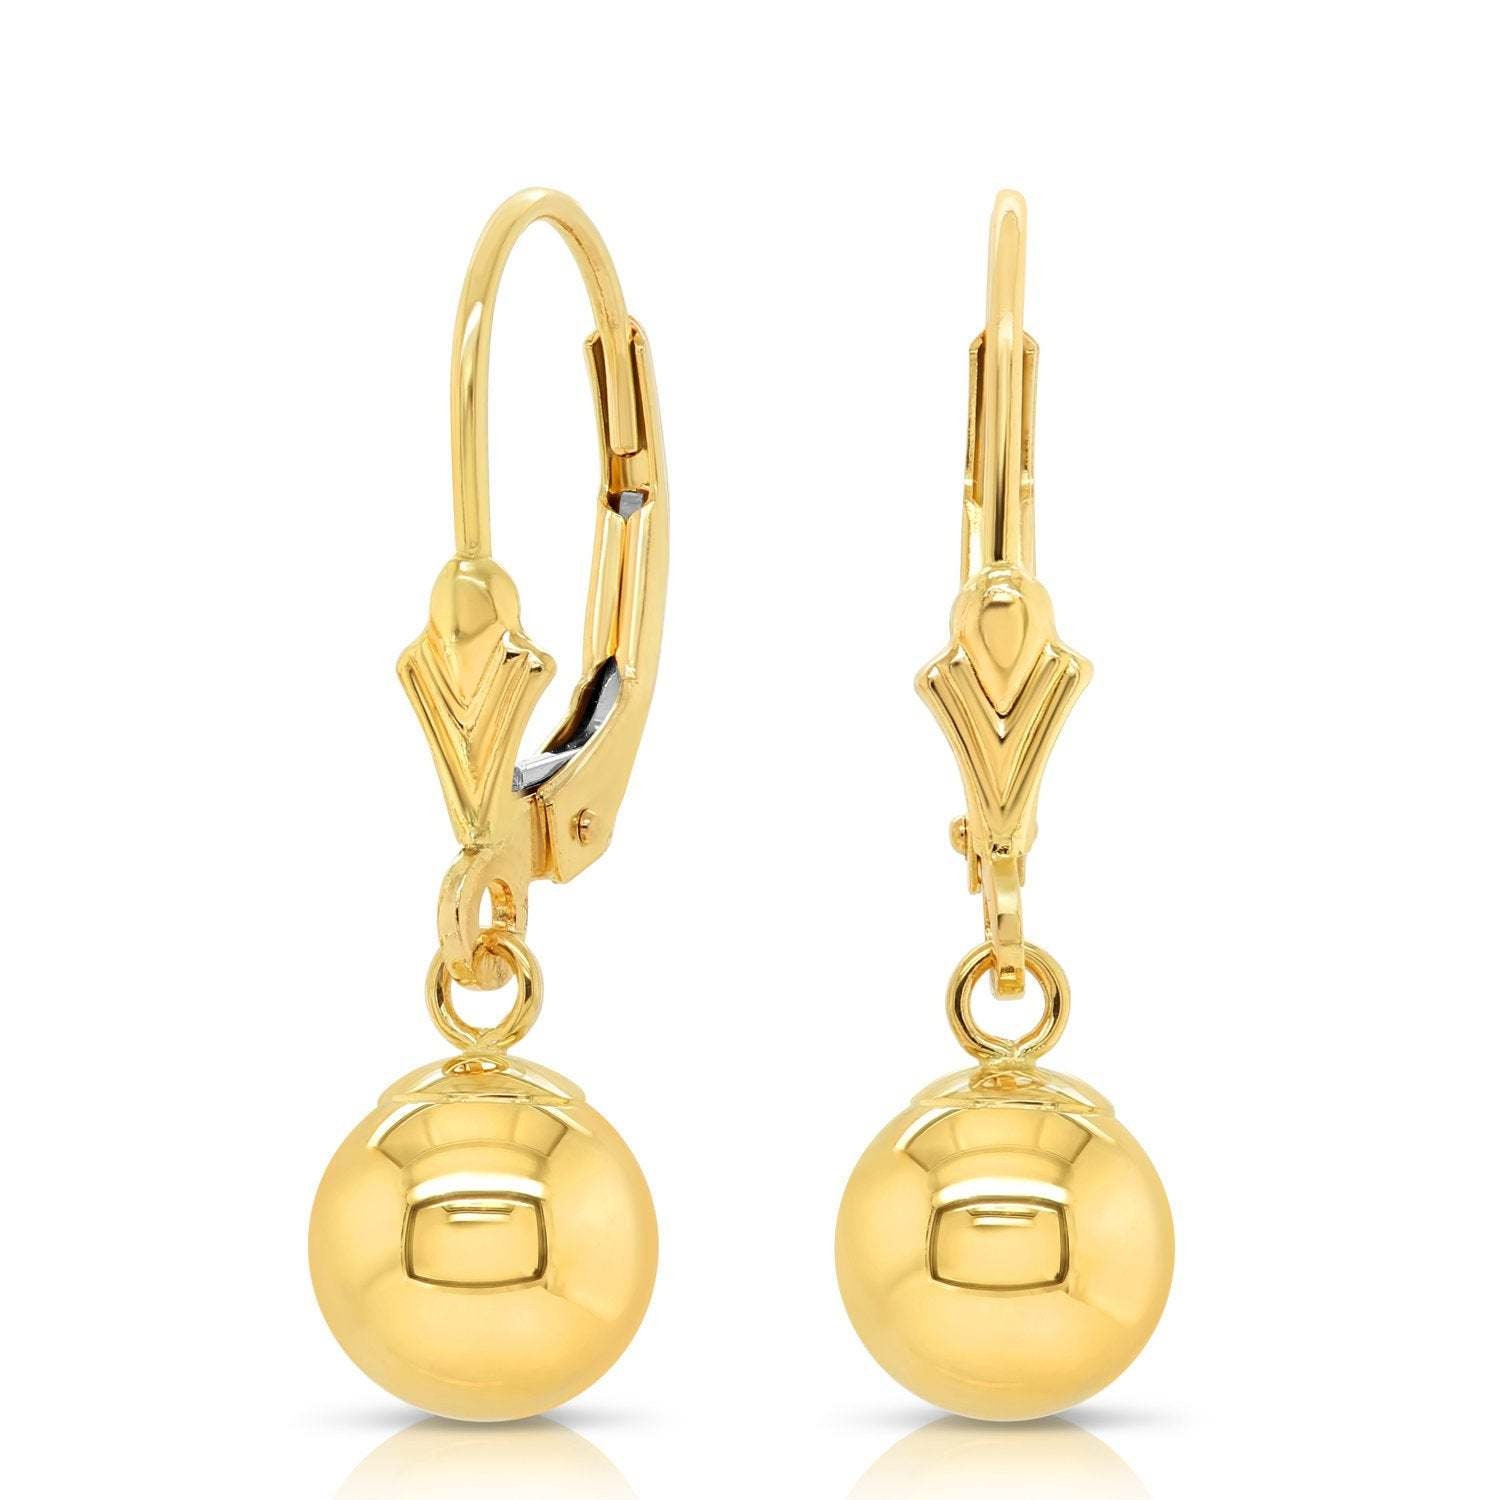 Tilo Jewelry 14k Yellow Gold Solitaire Round CZ Stud Post Earrings With  Screw-Backs (2.5MM) - Women, Men, Unisex 